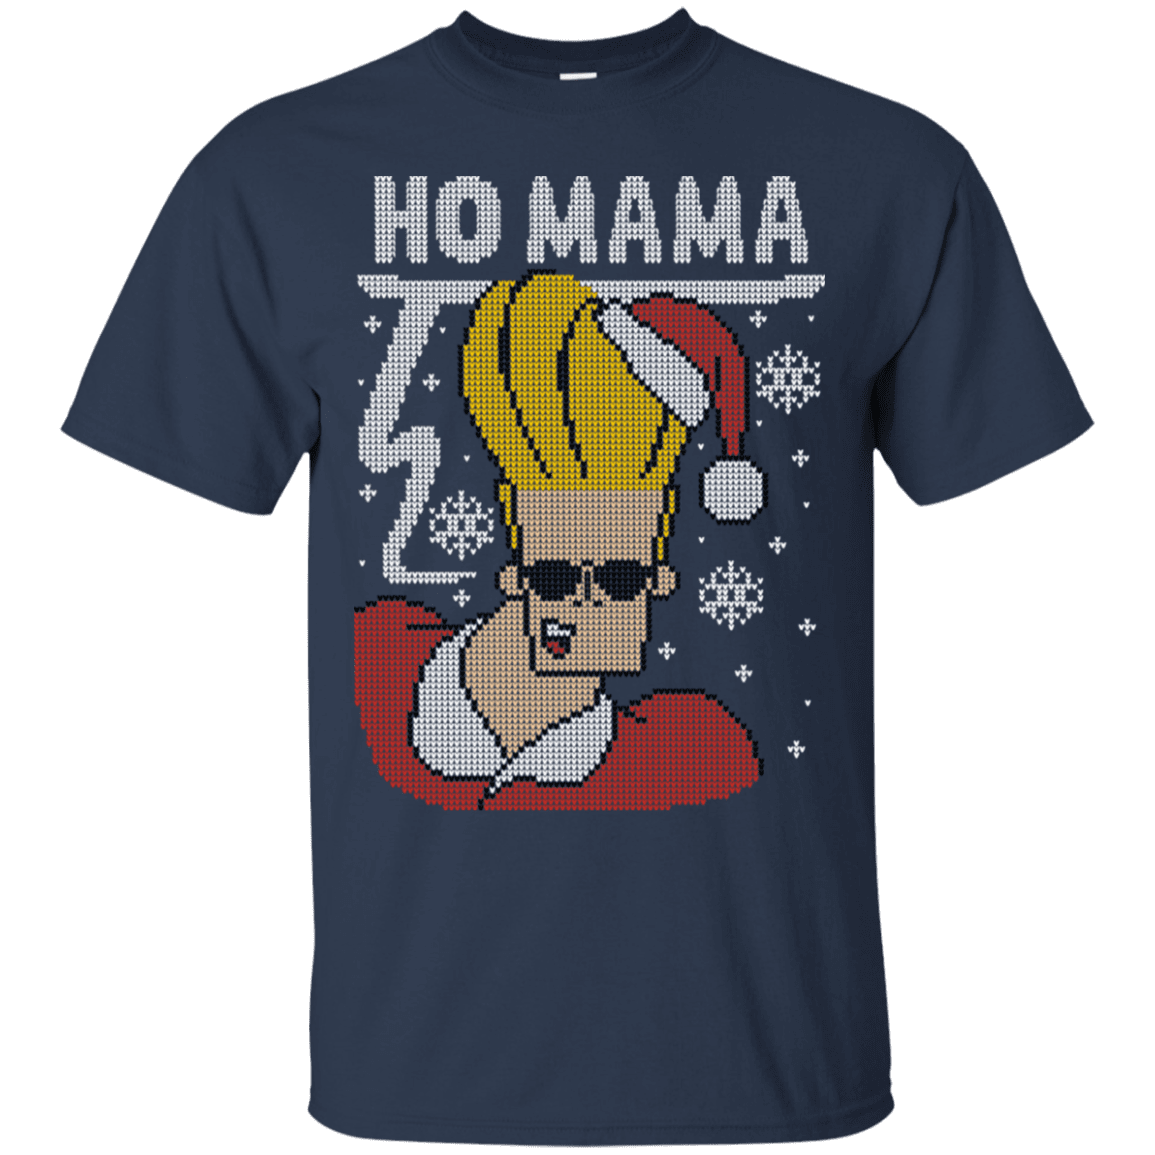 T-Shirts Navy / S Ho Mama T-Shirt